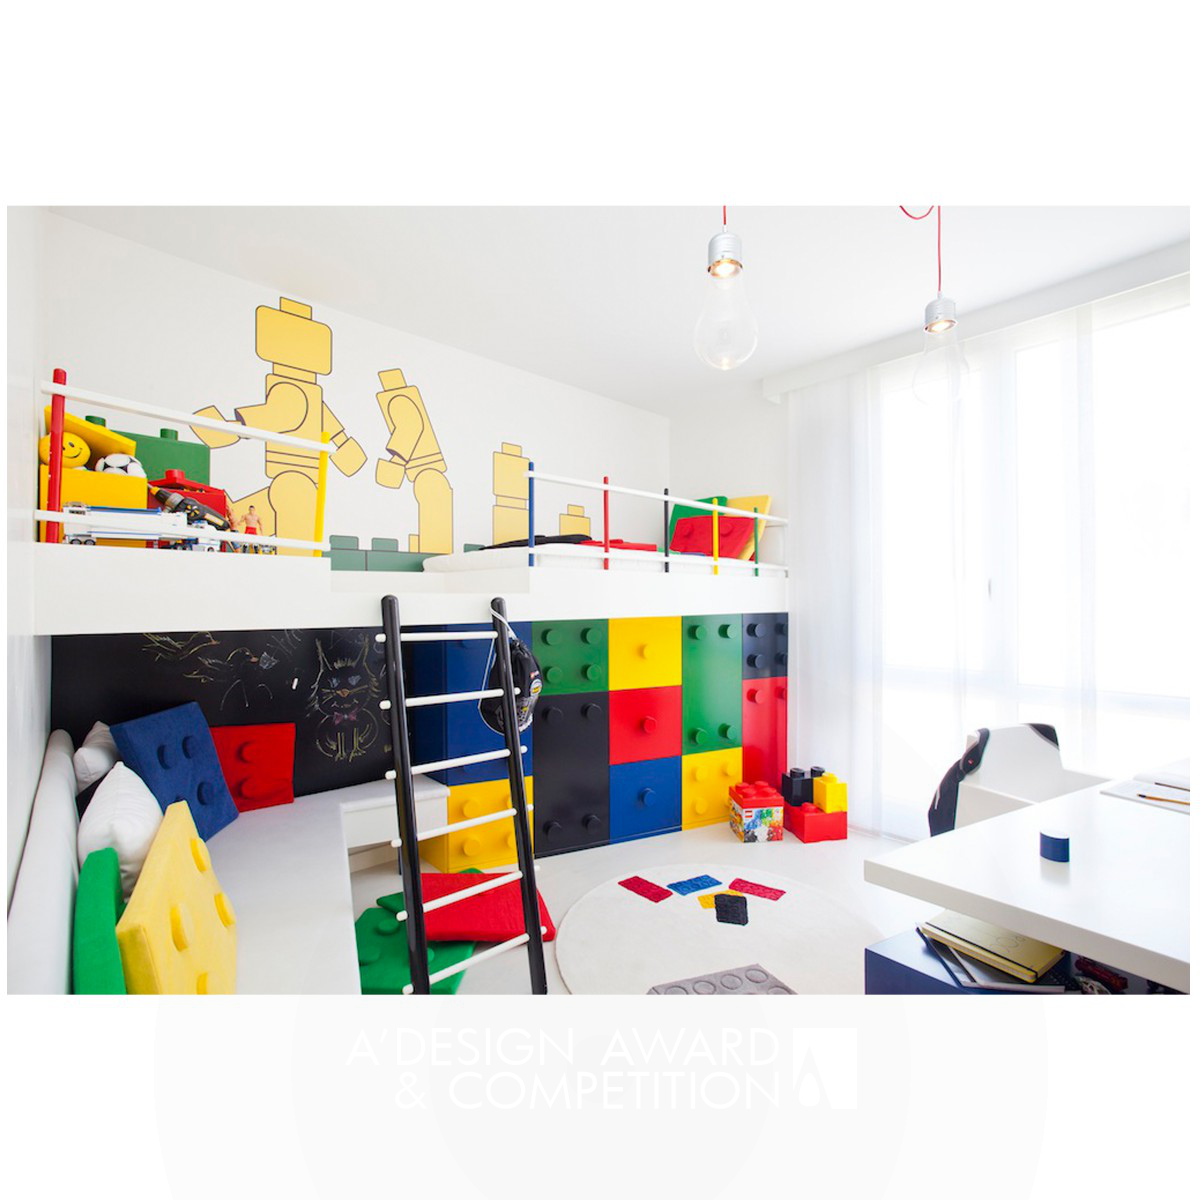 Connected Box Kids Room by Neslihan Pekcan